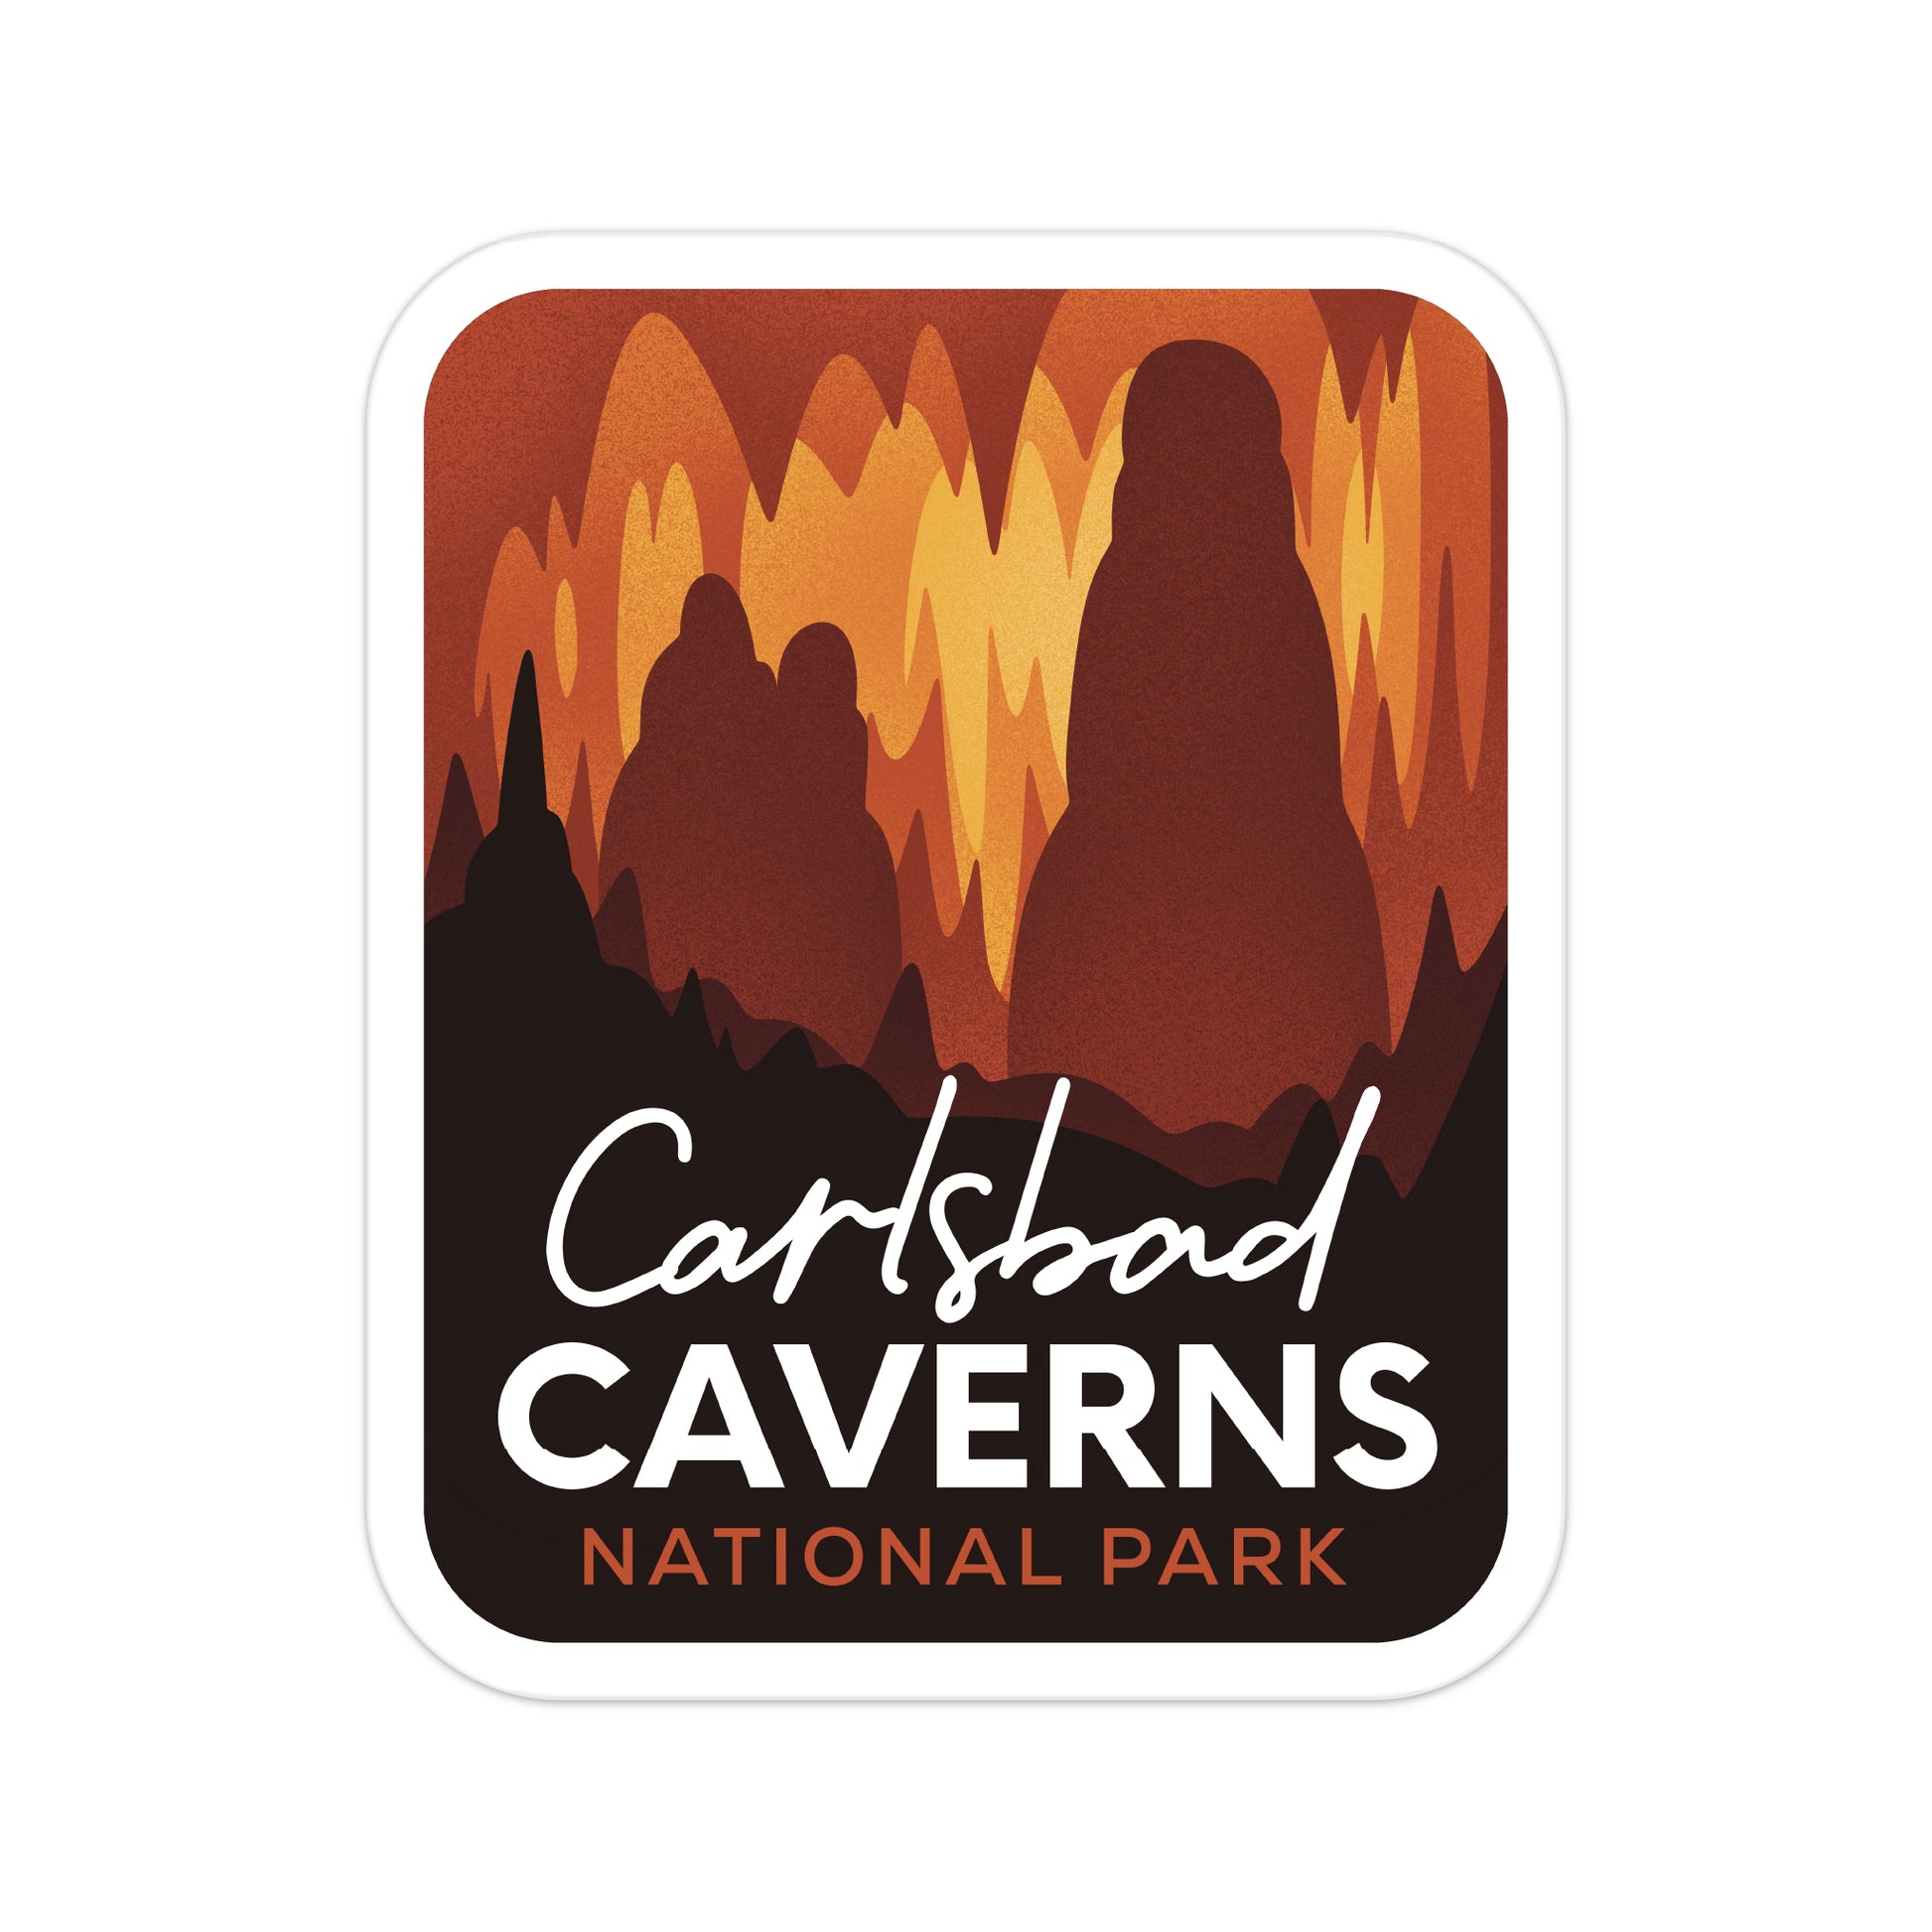 A sticker of Carlsbad Caverns National Park